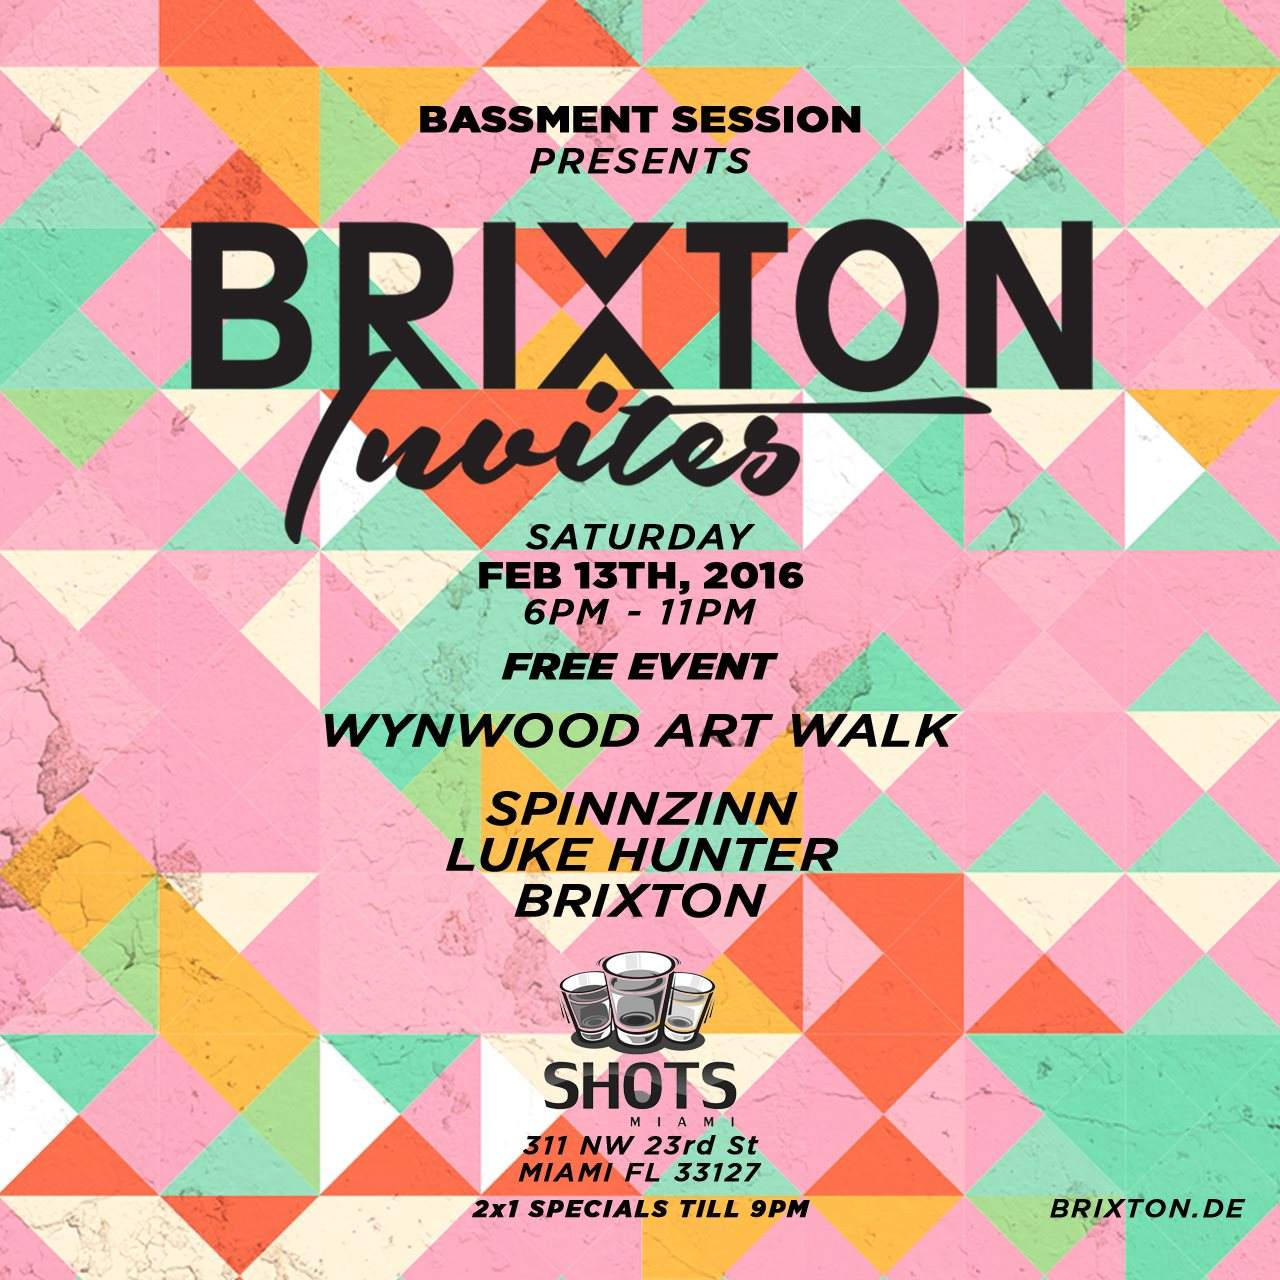 Bassment Sessions presents Brixton Invites - Página trasera